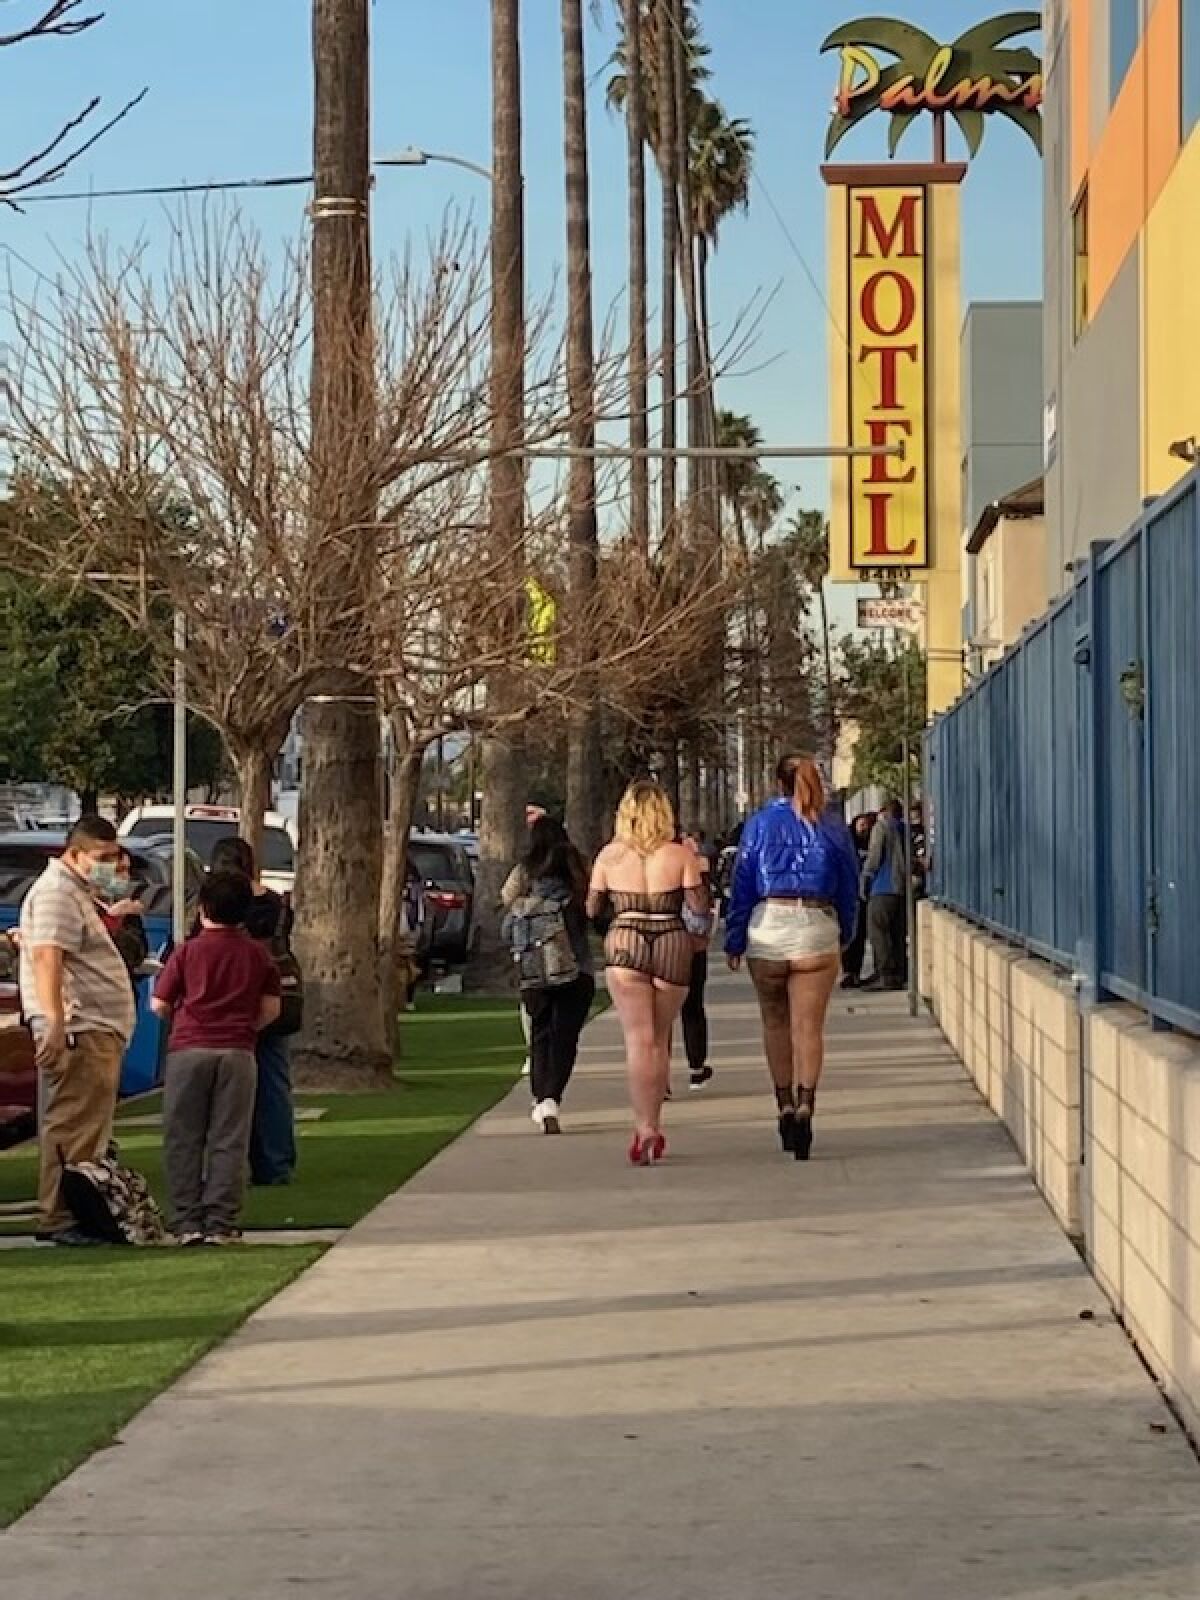 Two women in high heels walk past the Palms Motel.